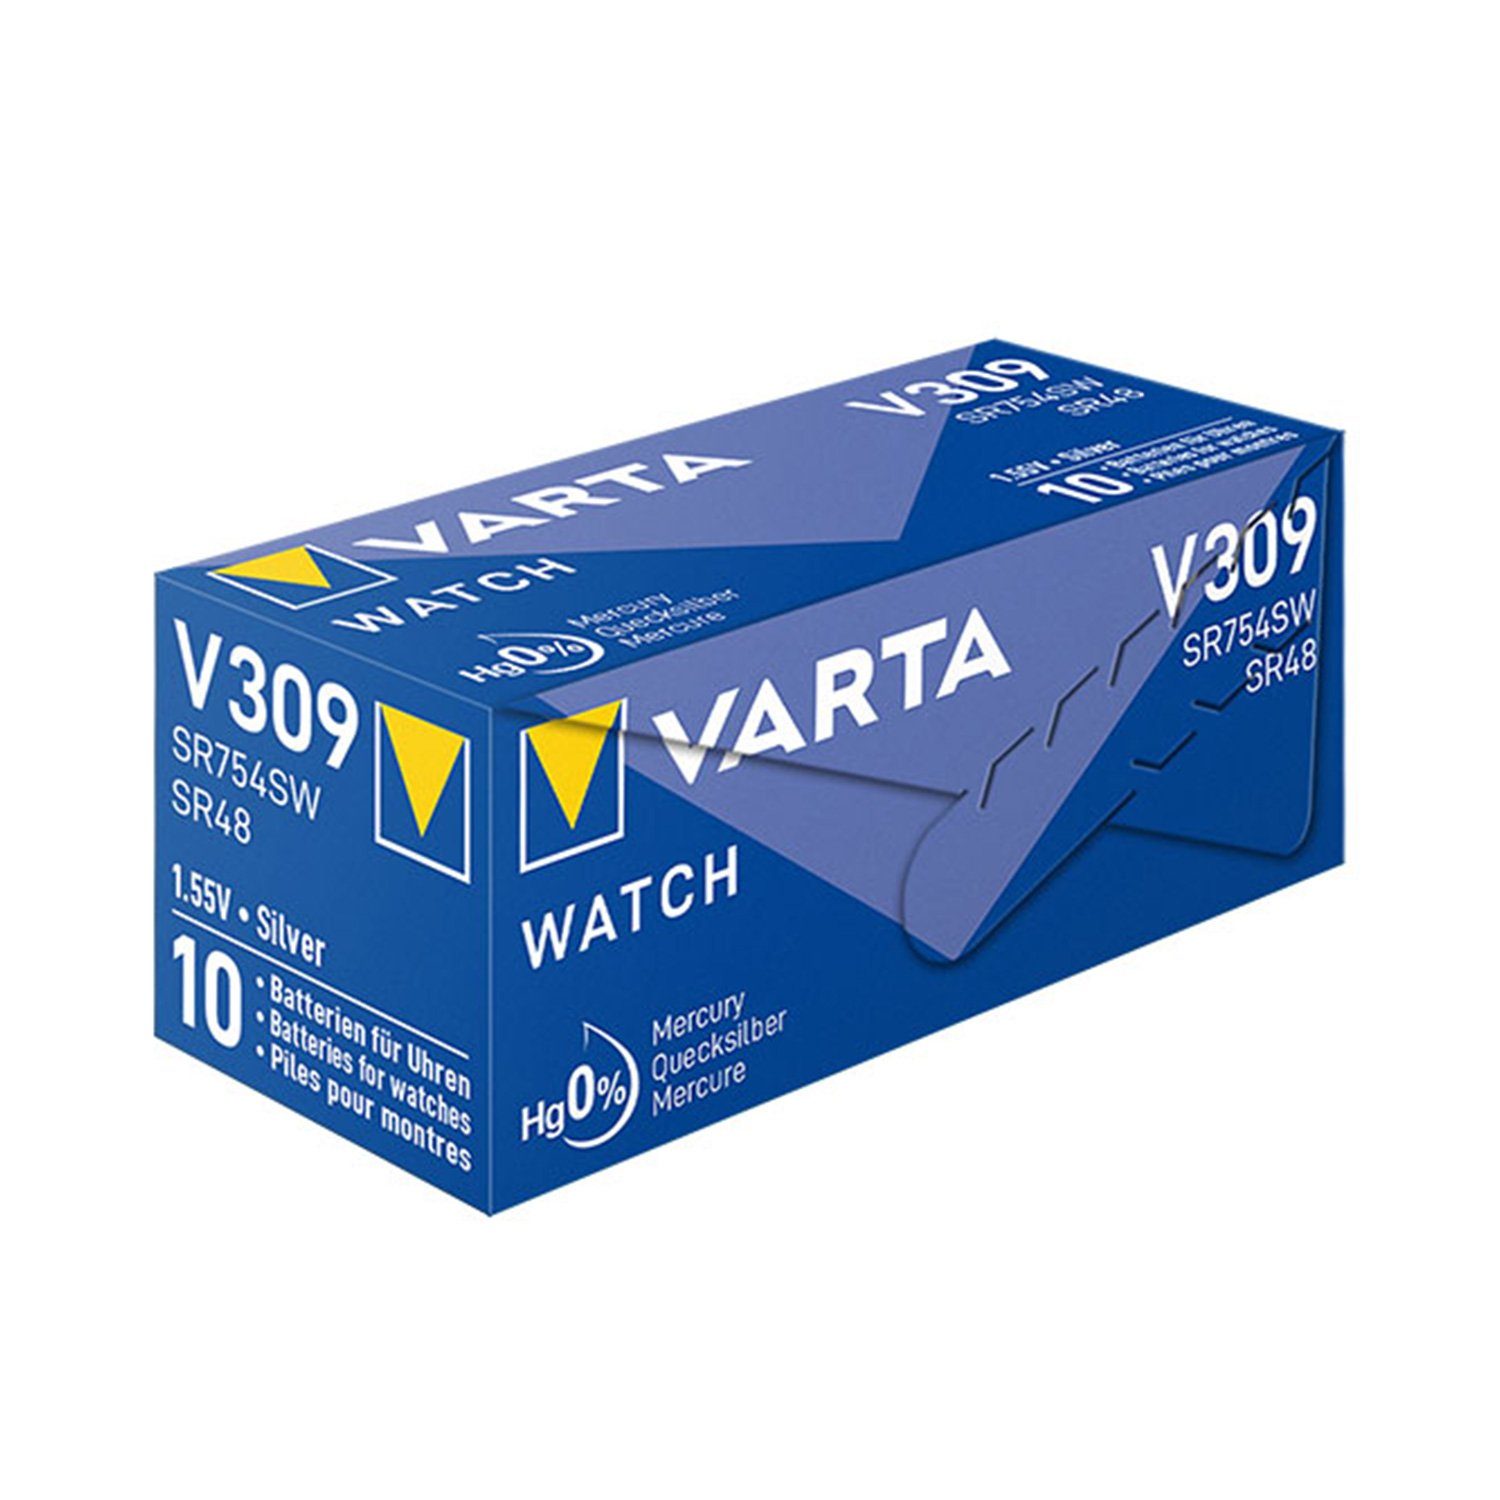 VARTA Batterie Knopfzelle 309 Varta